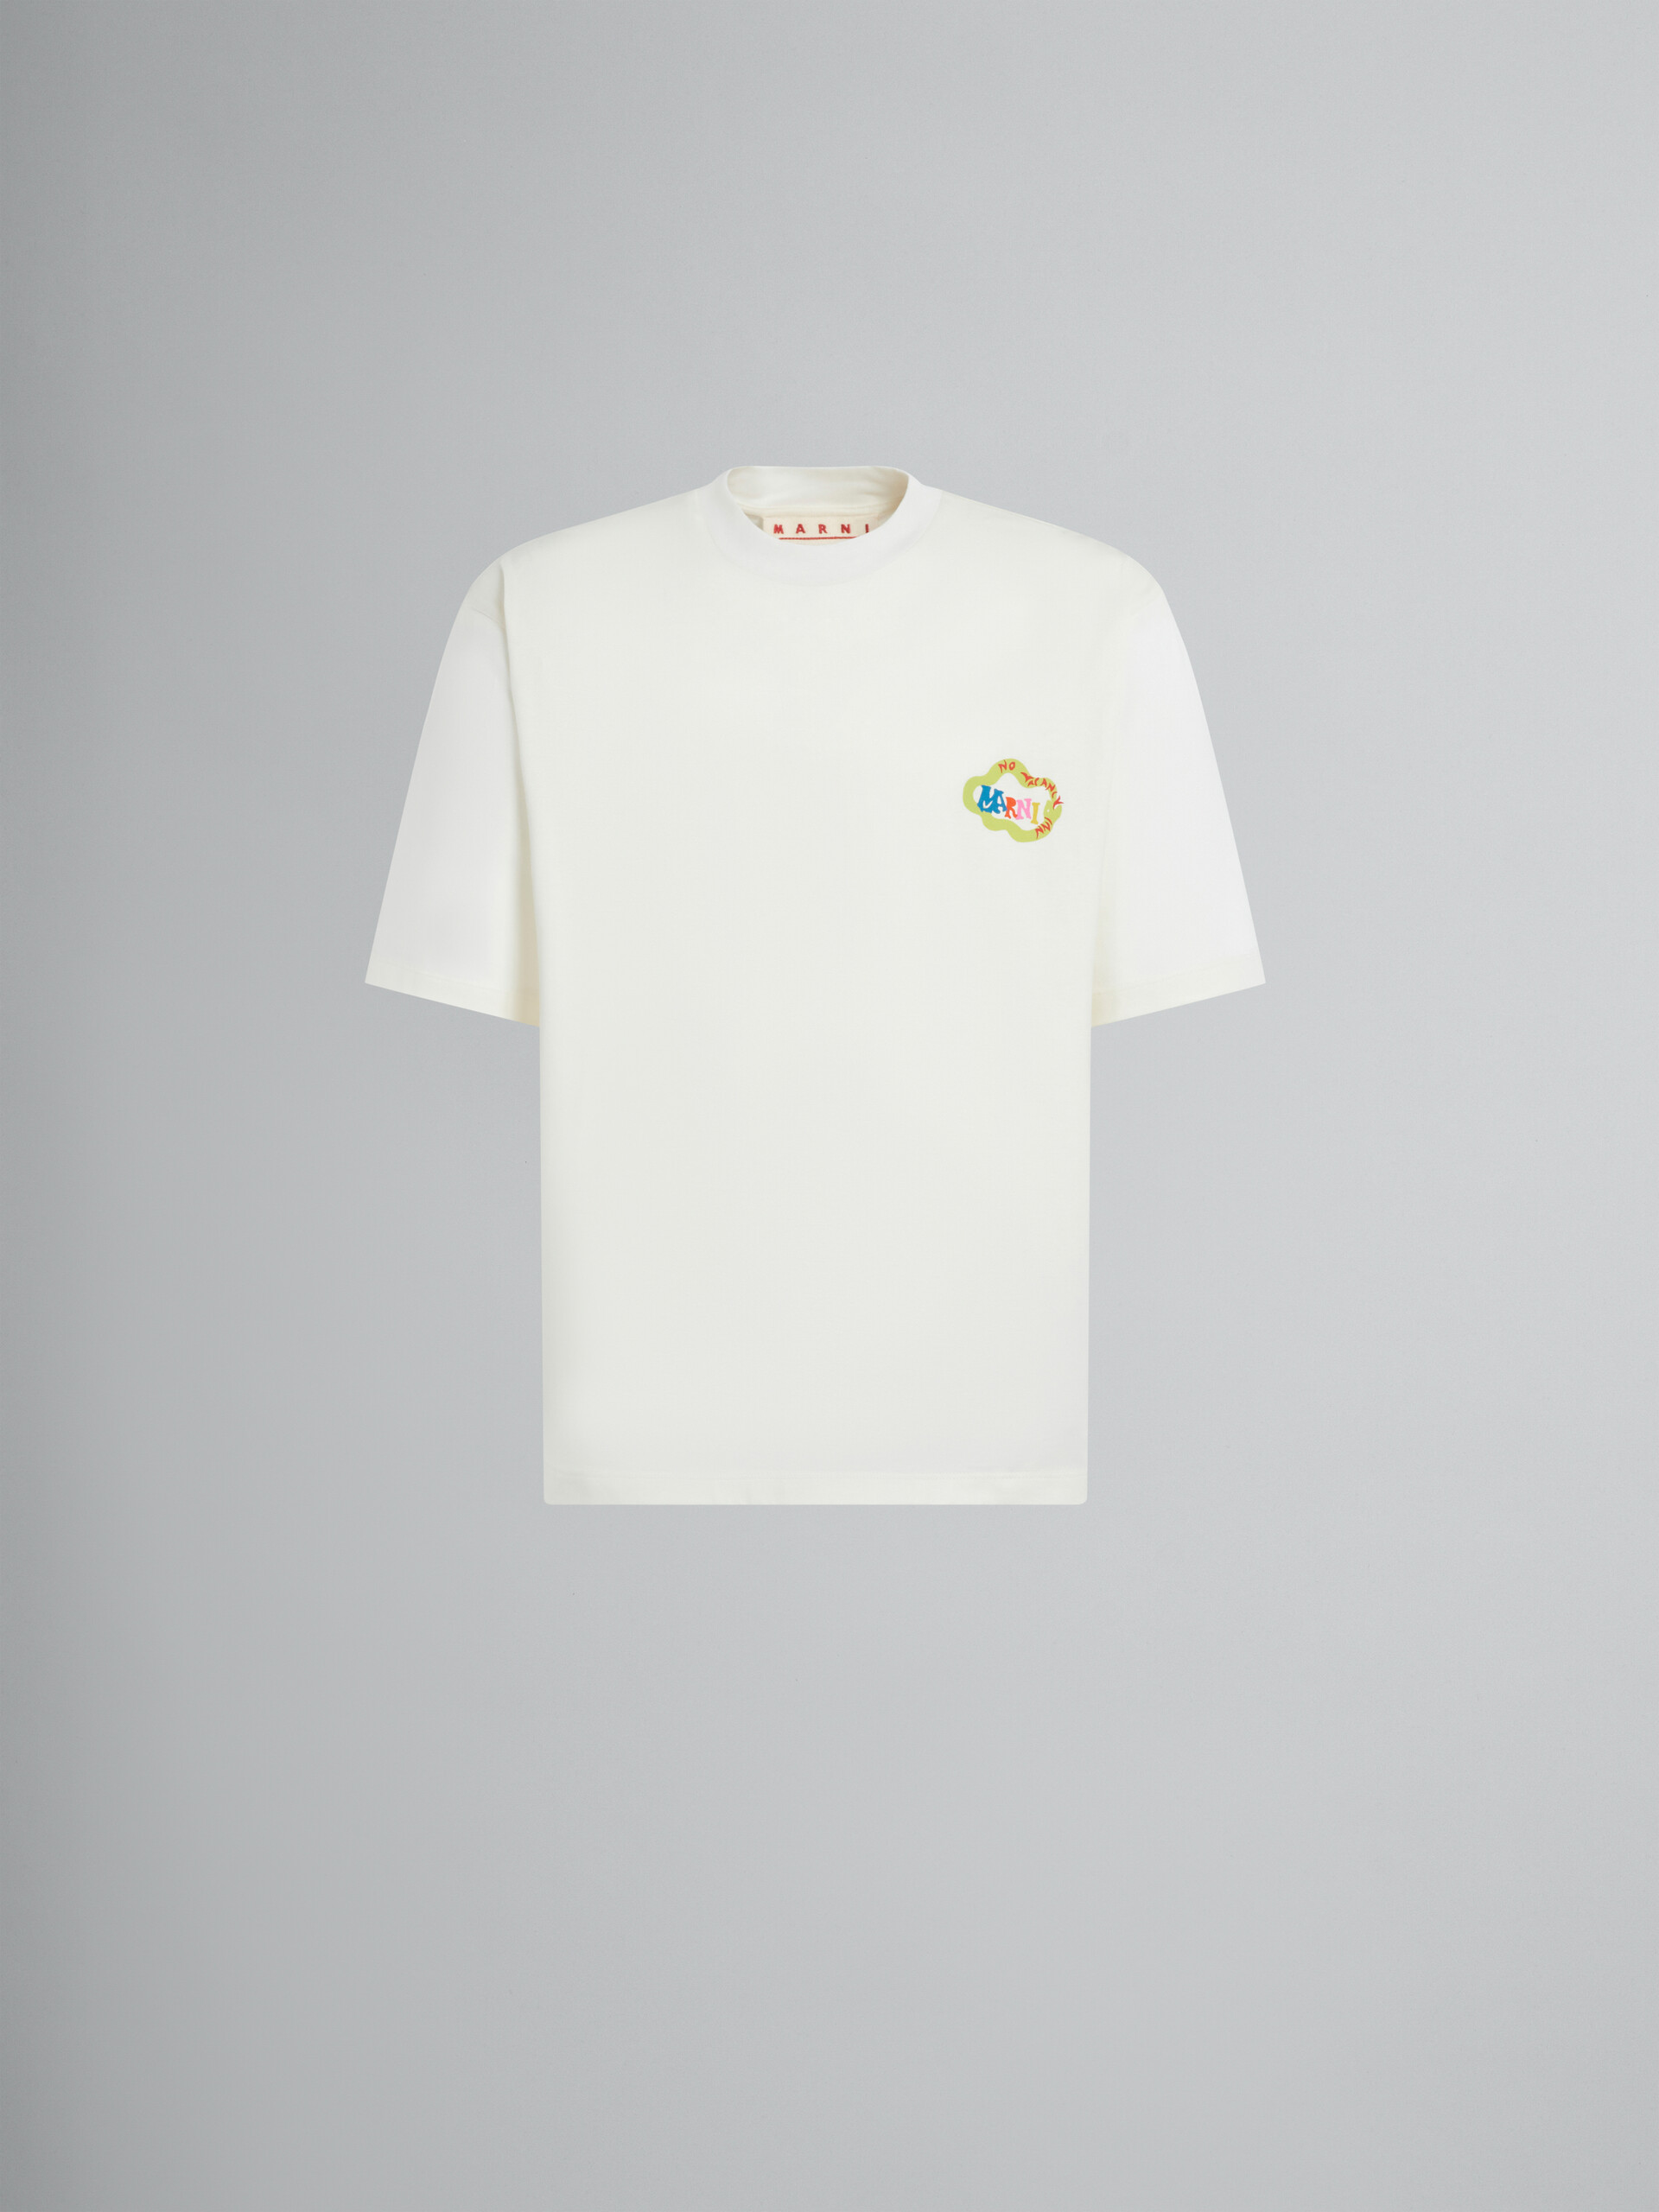 Marni x No Vacancy Inn - White T-shirt in bio cotton jersey with snake logo print - T-shirts - Image 1